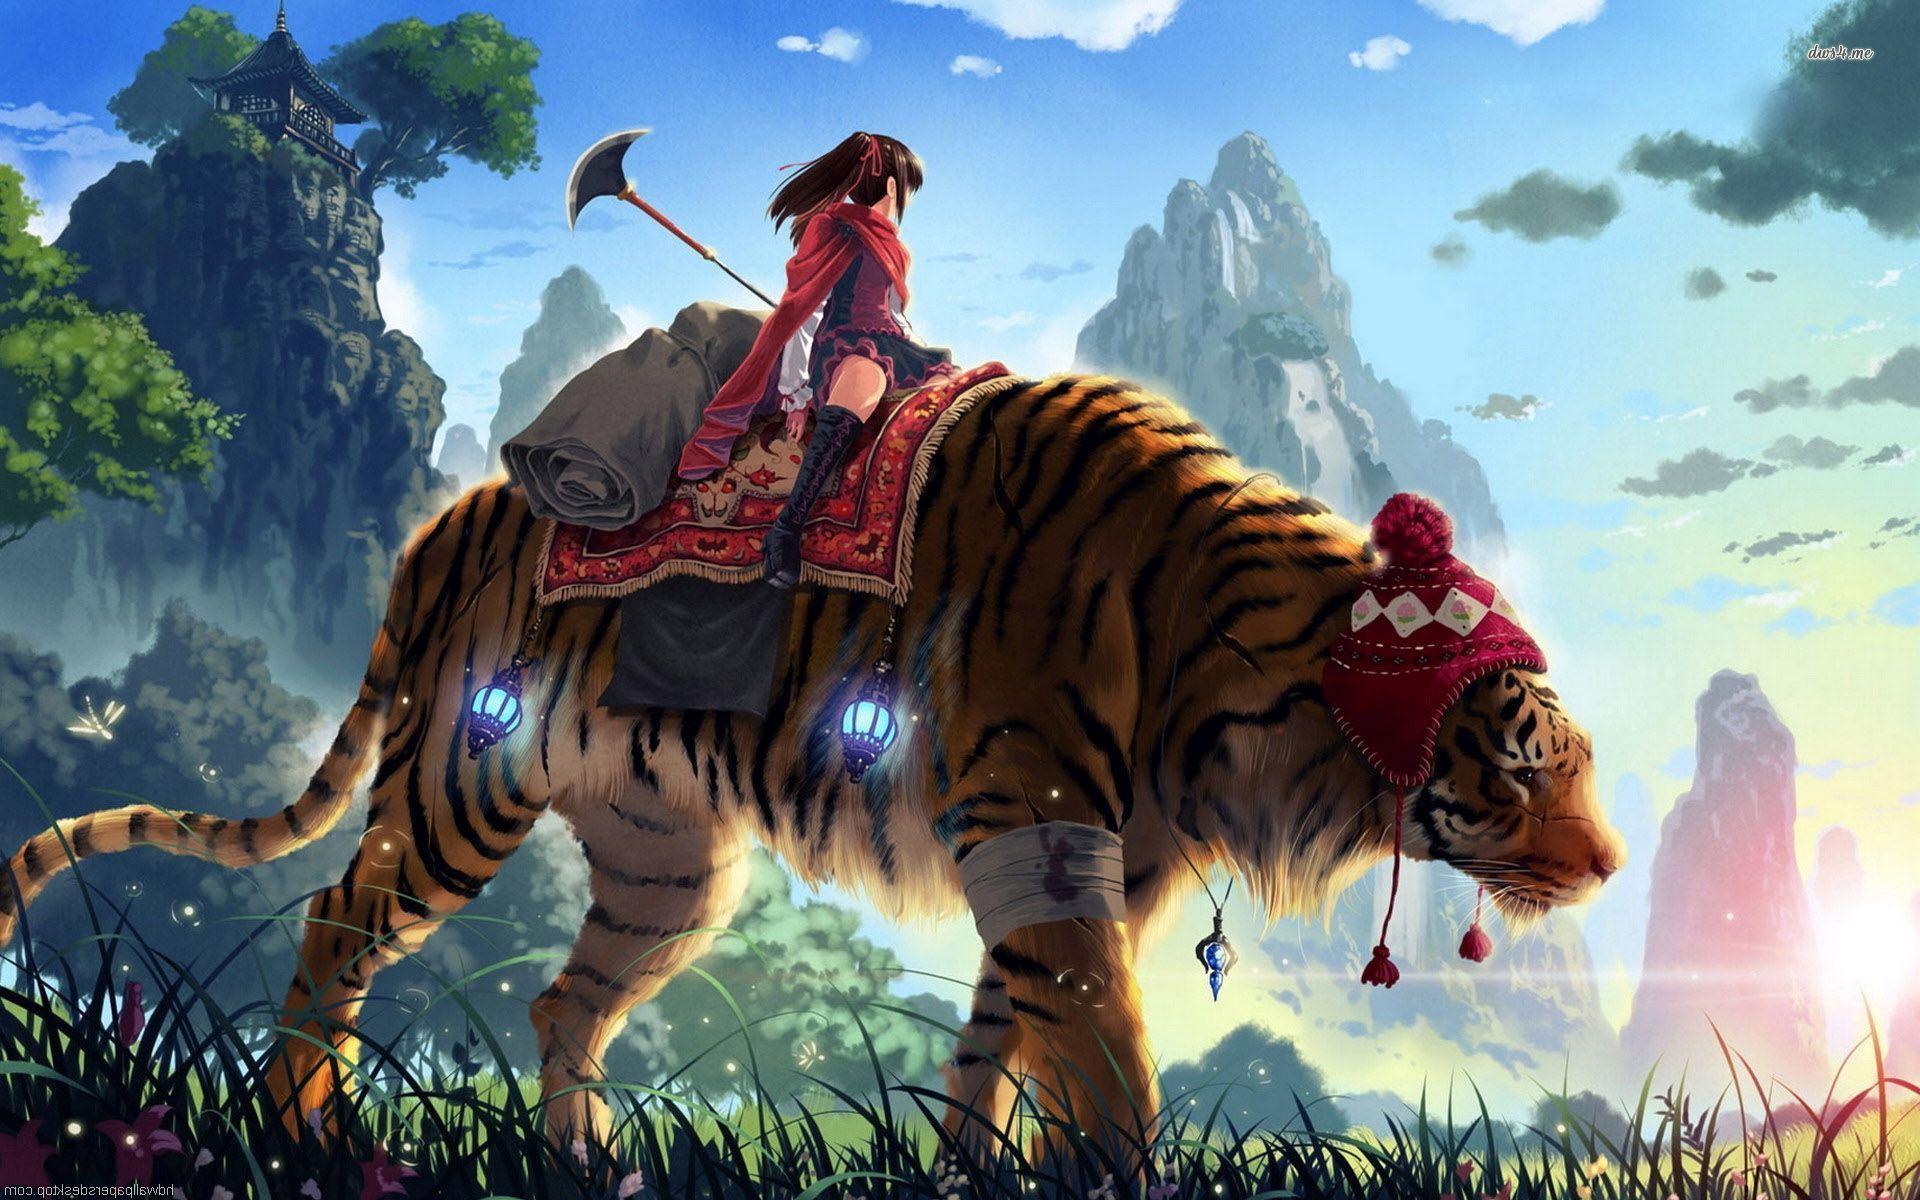 Girl riding a Tiger wallpaper. Pretty Anime Wallpaper. Anime art